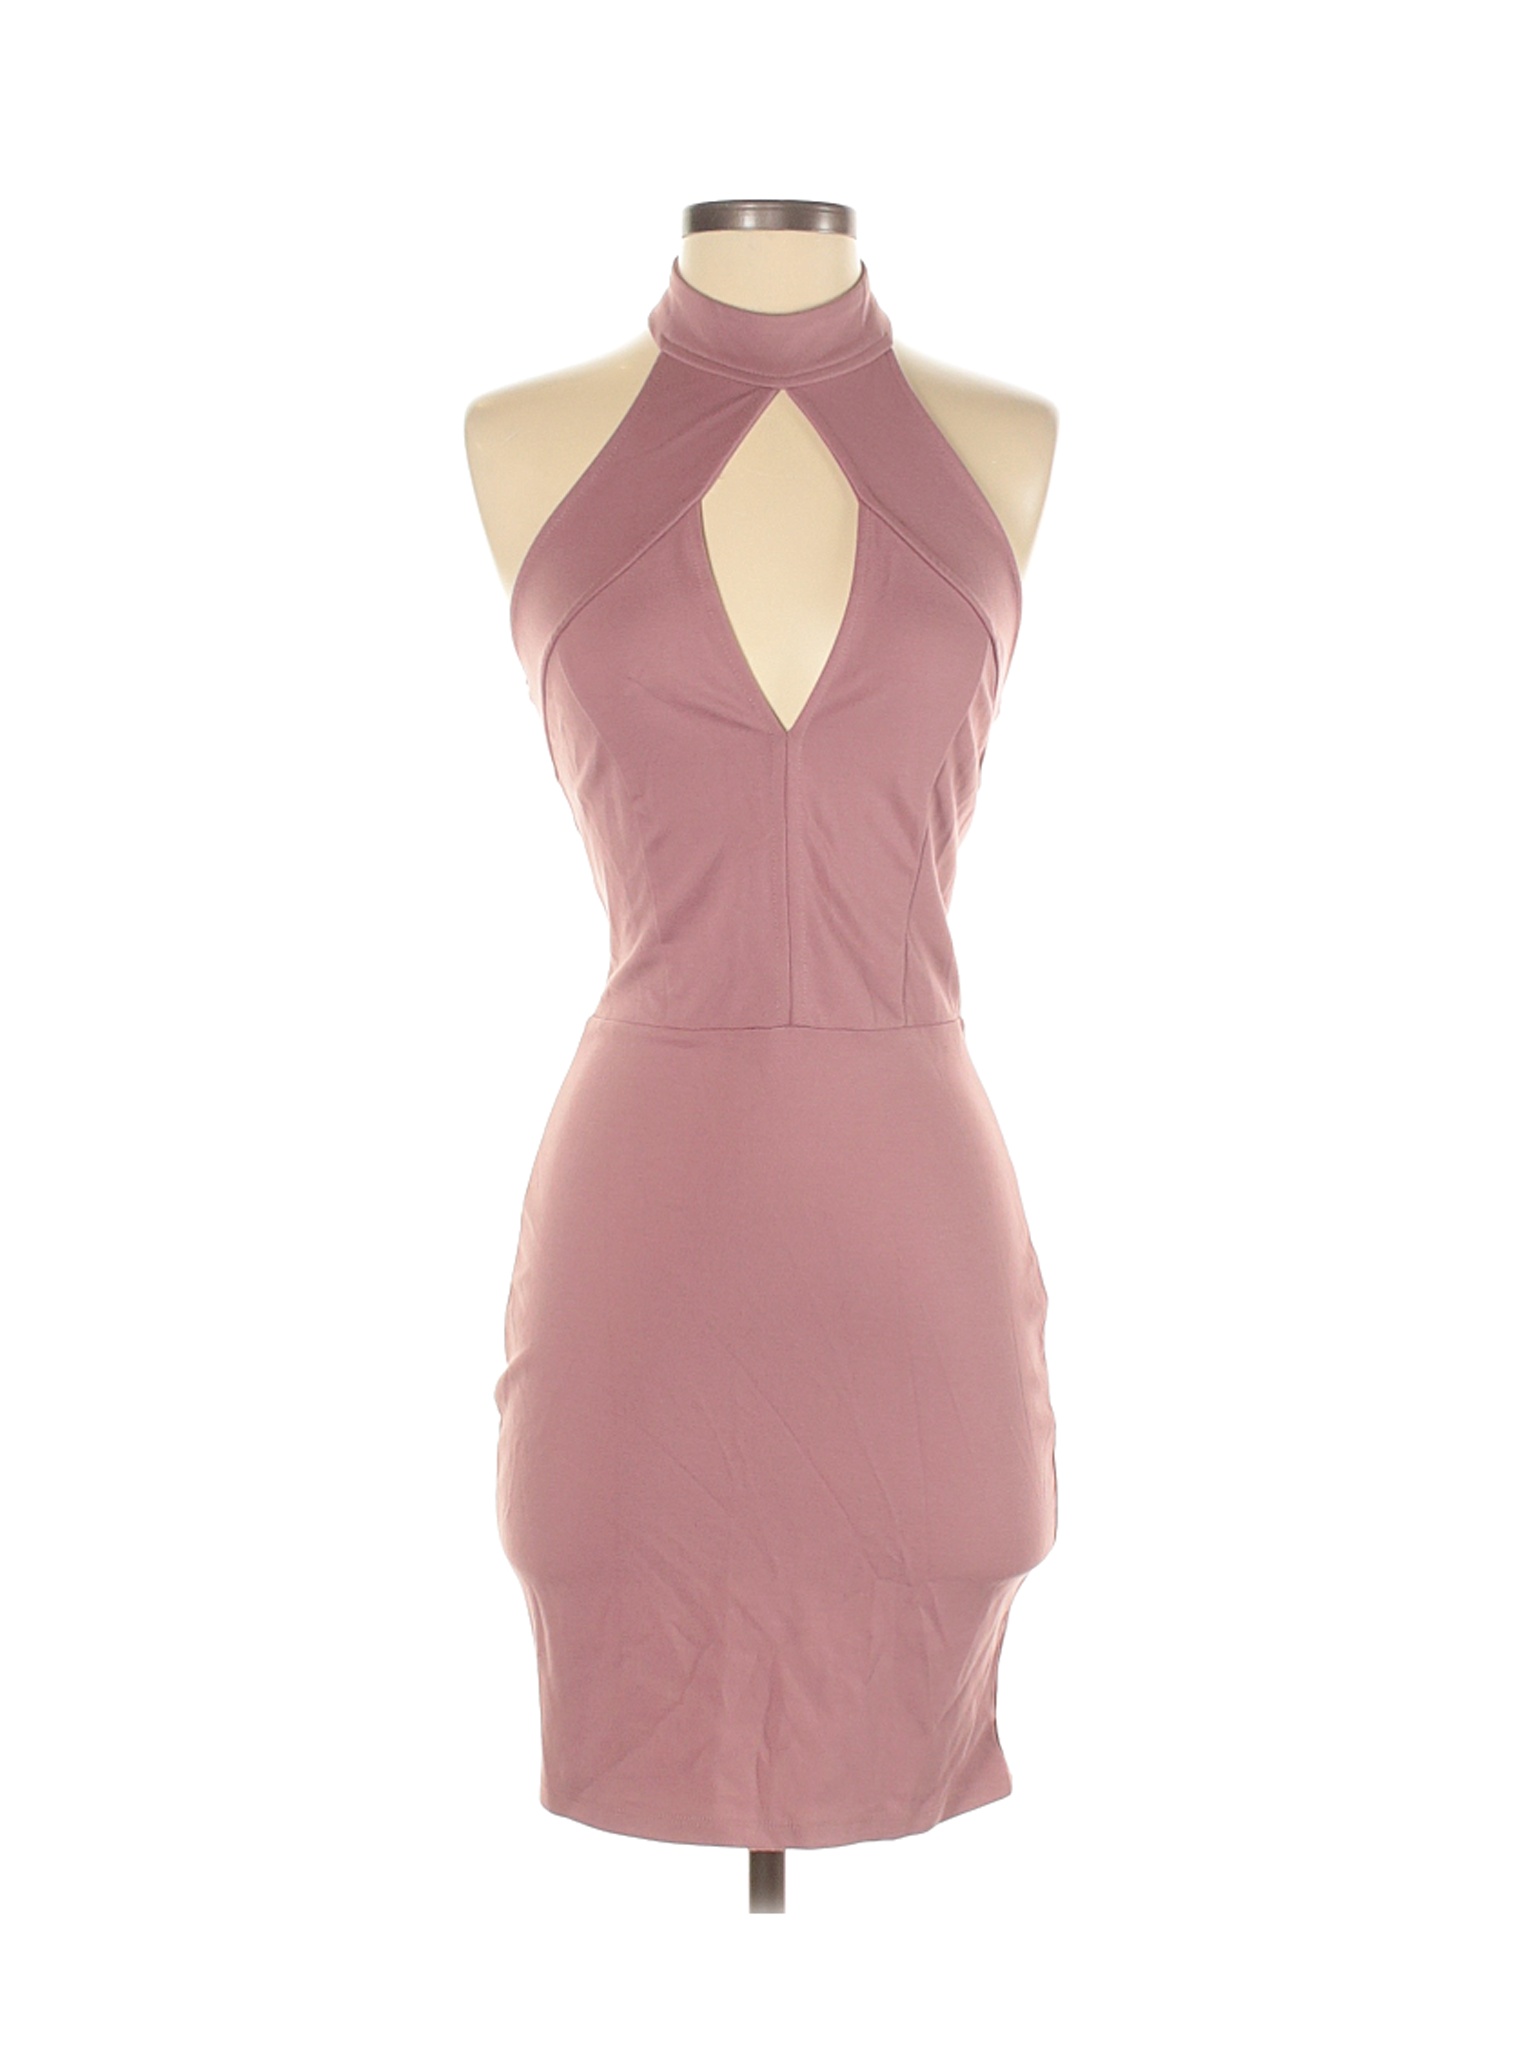 Charlotte Russe Solid Pink Cocktail Dress Size S - 62% off | thredUP